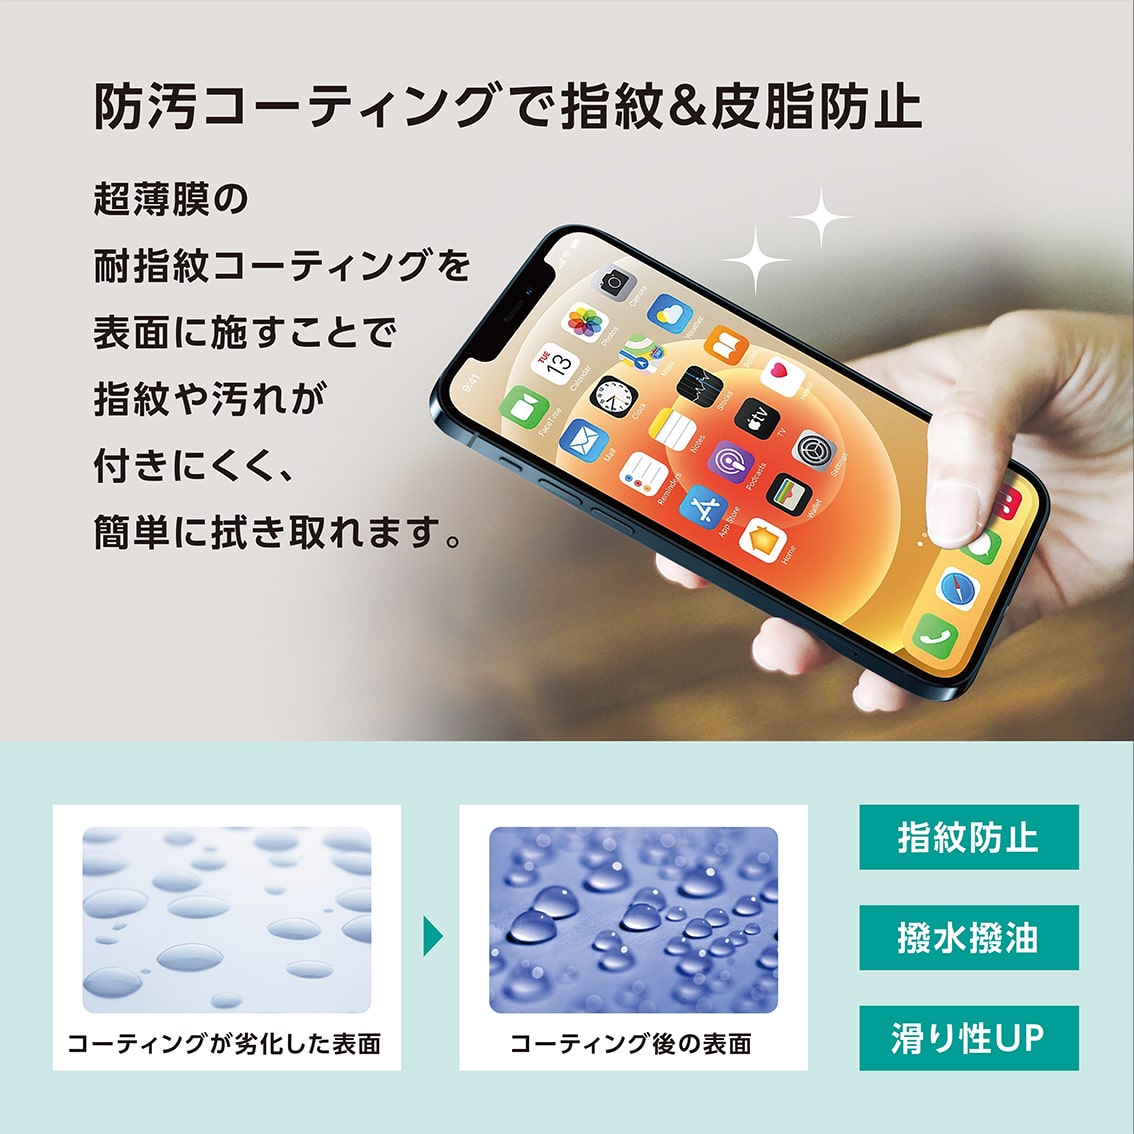 iPhone14 Pro Max 対応 抗菌強化ガラス 角割れ防止 0.25mm for iPhone 2022年モデル 6.7inch （3レンズ）